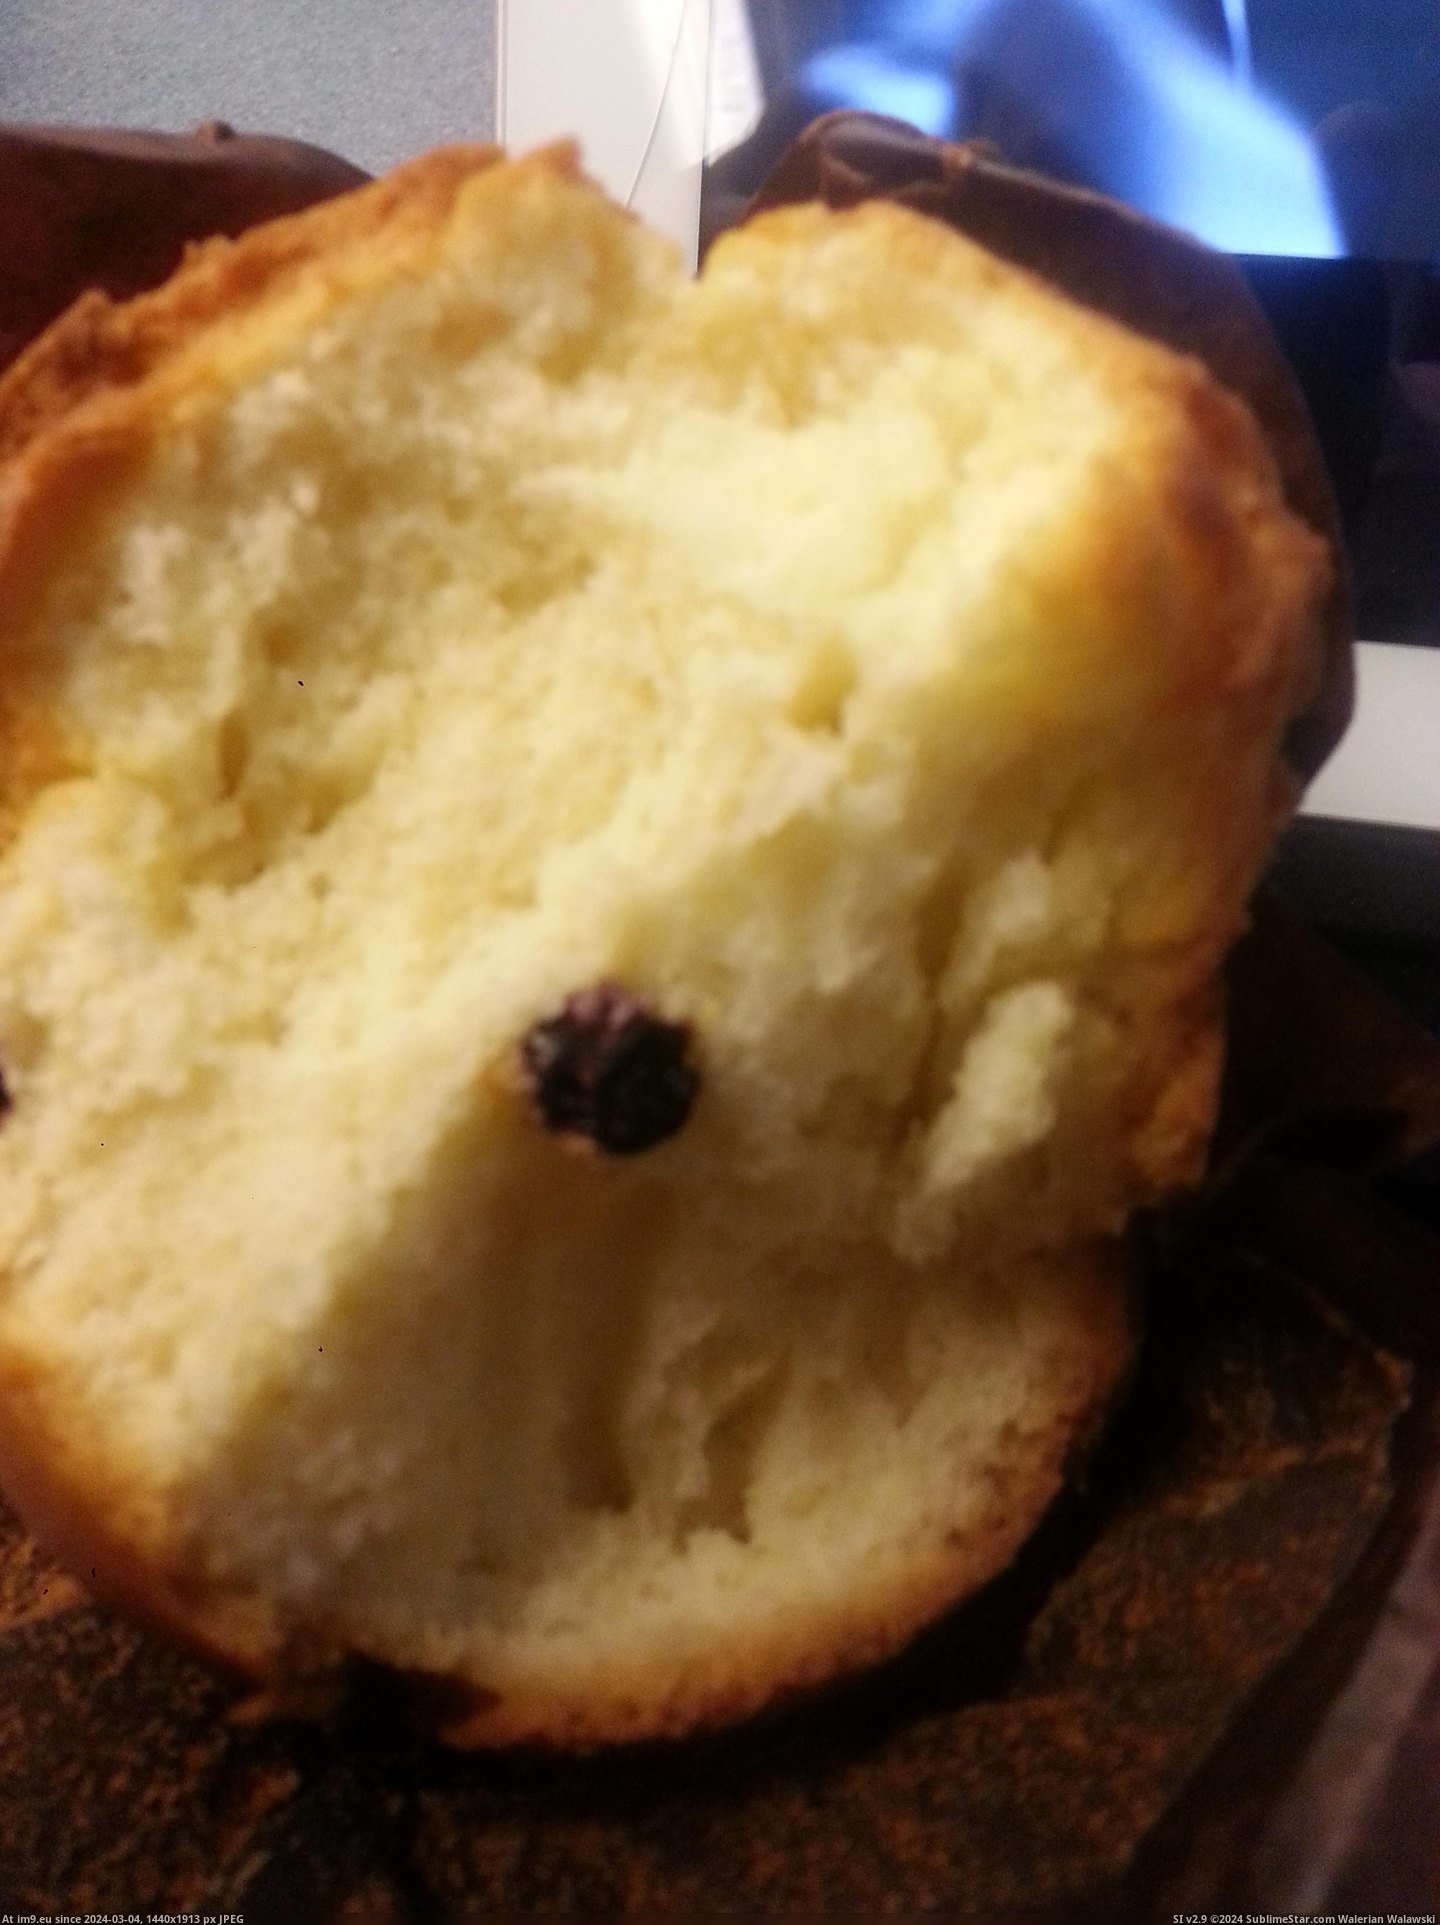 #Funny #Description #Expect #Blueberry #Muffin #Ordered #Accurate [Funny] Ordered a blueberry muffin. Got 1 blueberry. I didnt expect the description to be so accurate. Pic. (Obraz z album My r/FUNNY favs))